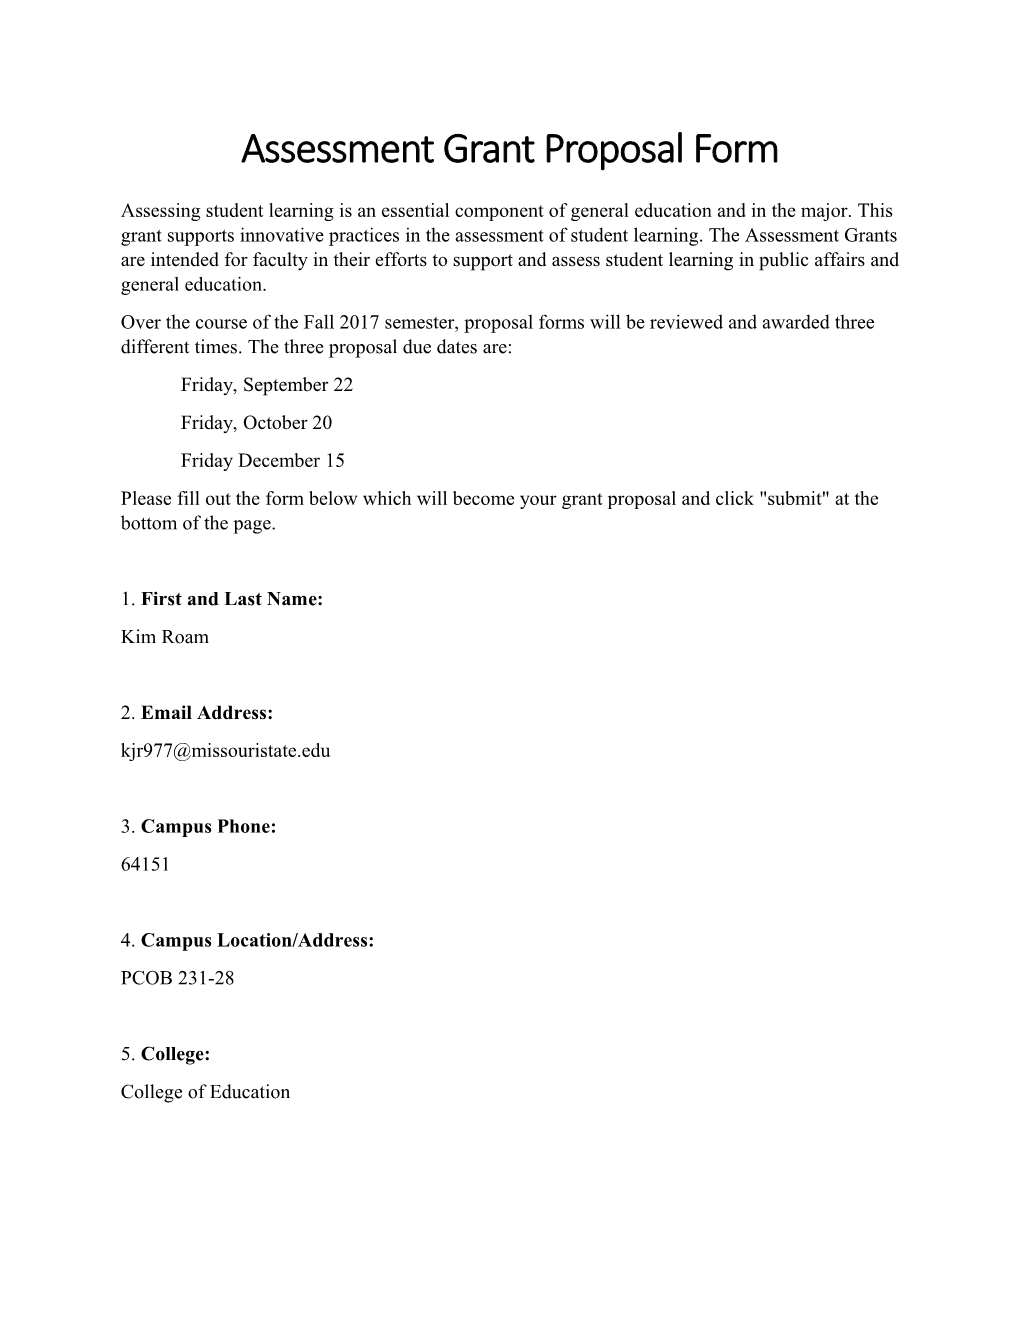 Assessment Grant Proposal Form